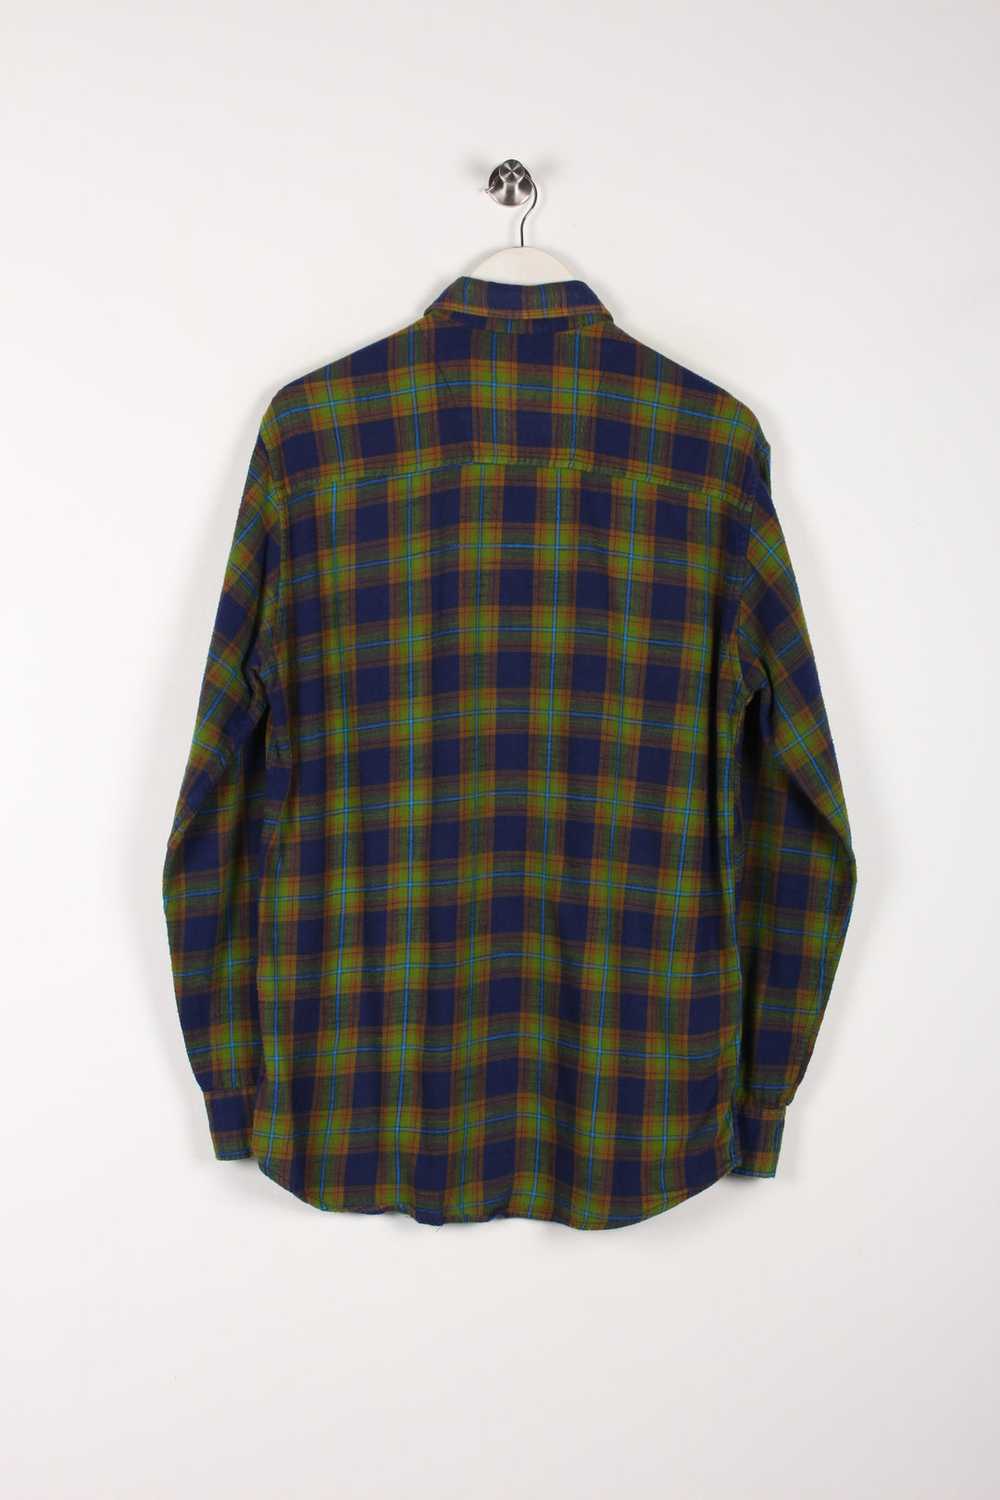 Vintage Plaid Flannel Shirt XL - image 3